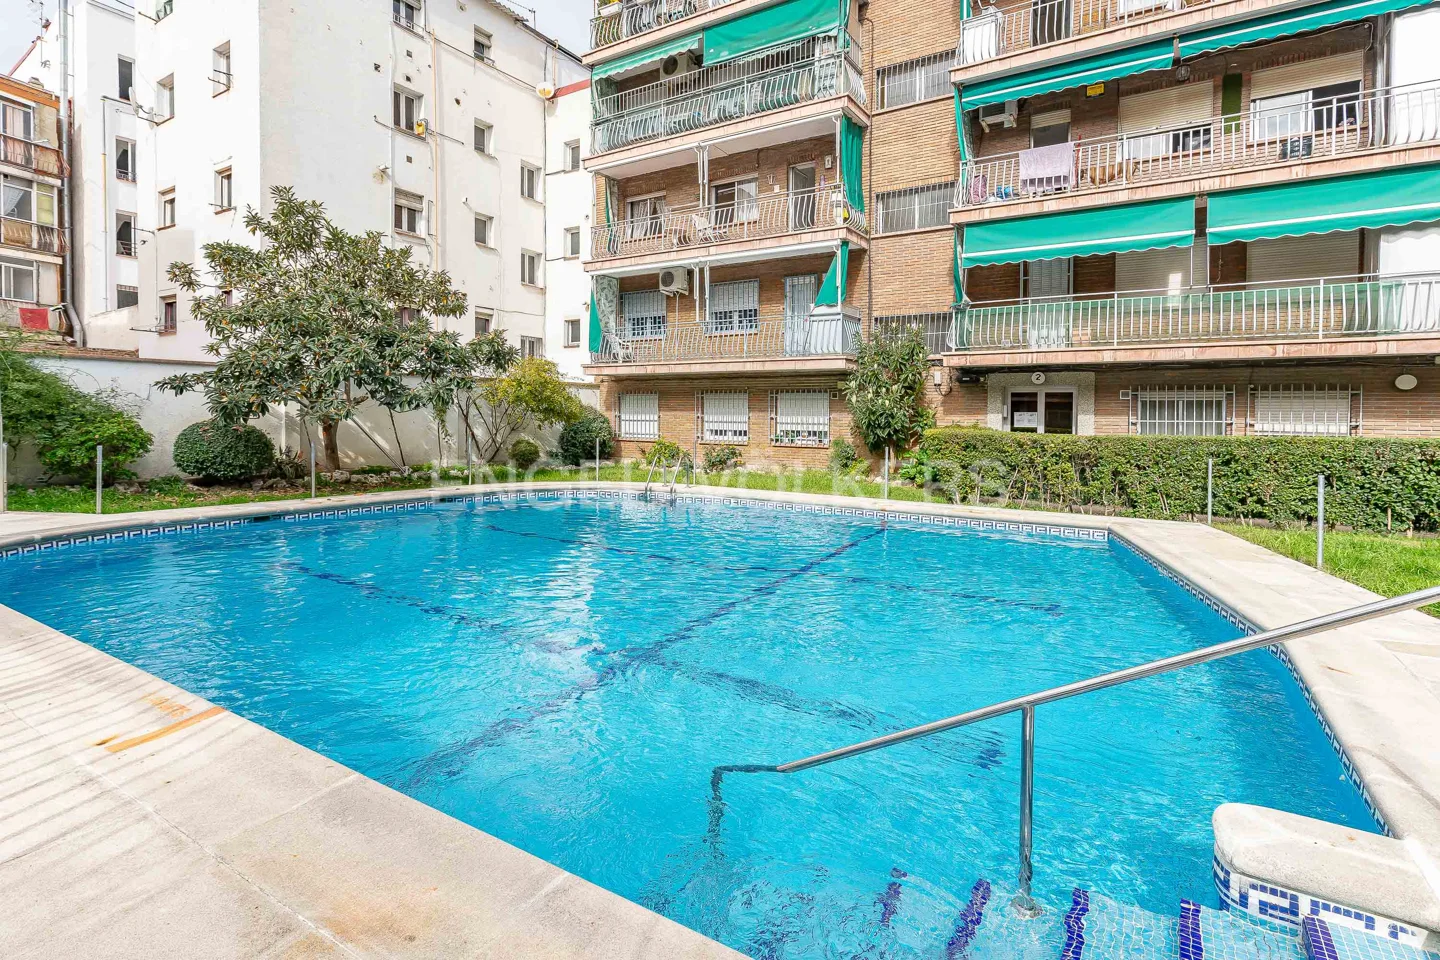 Spacious apartment with swimming pool in Ventas